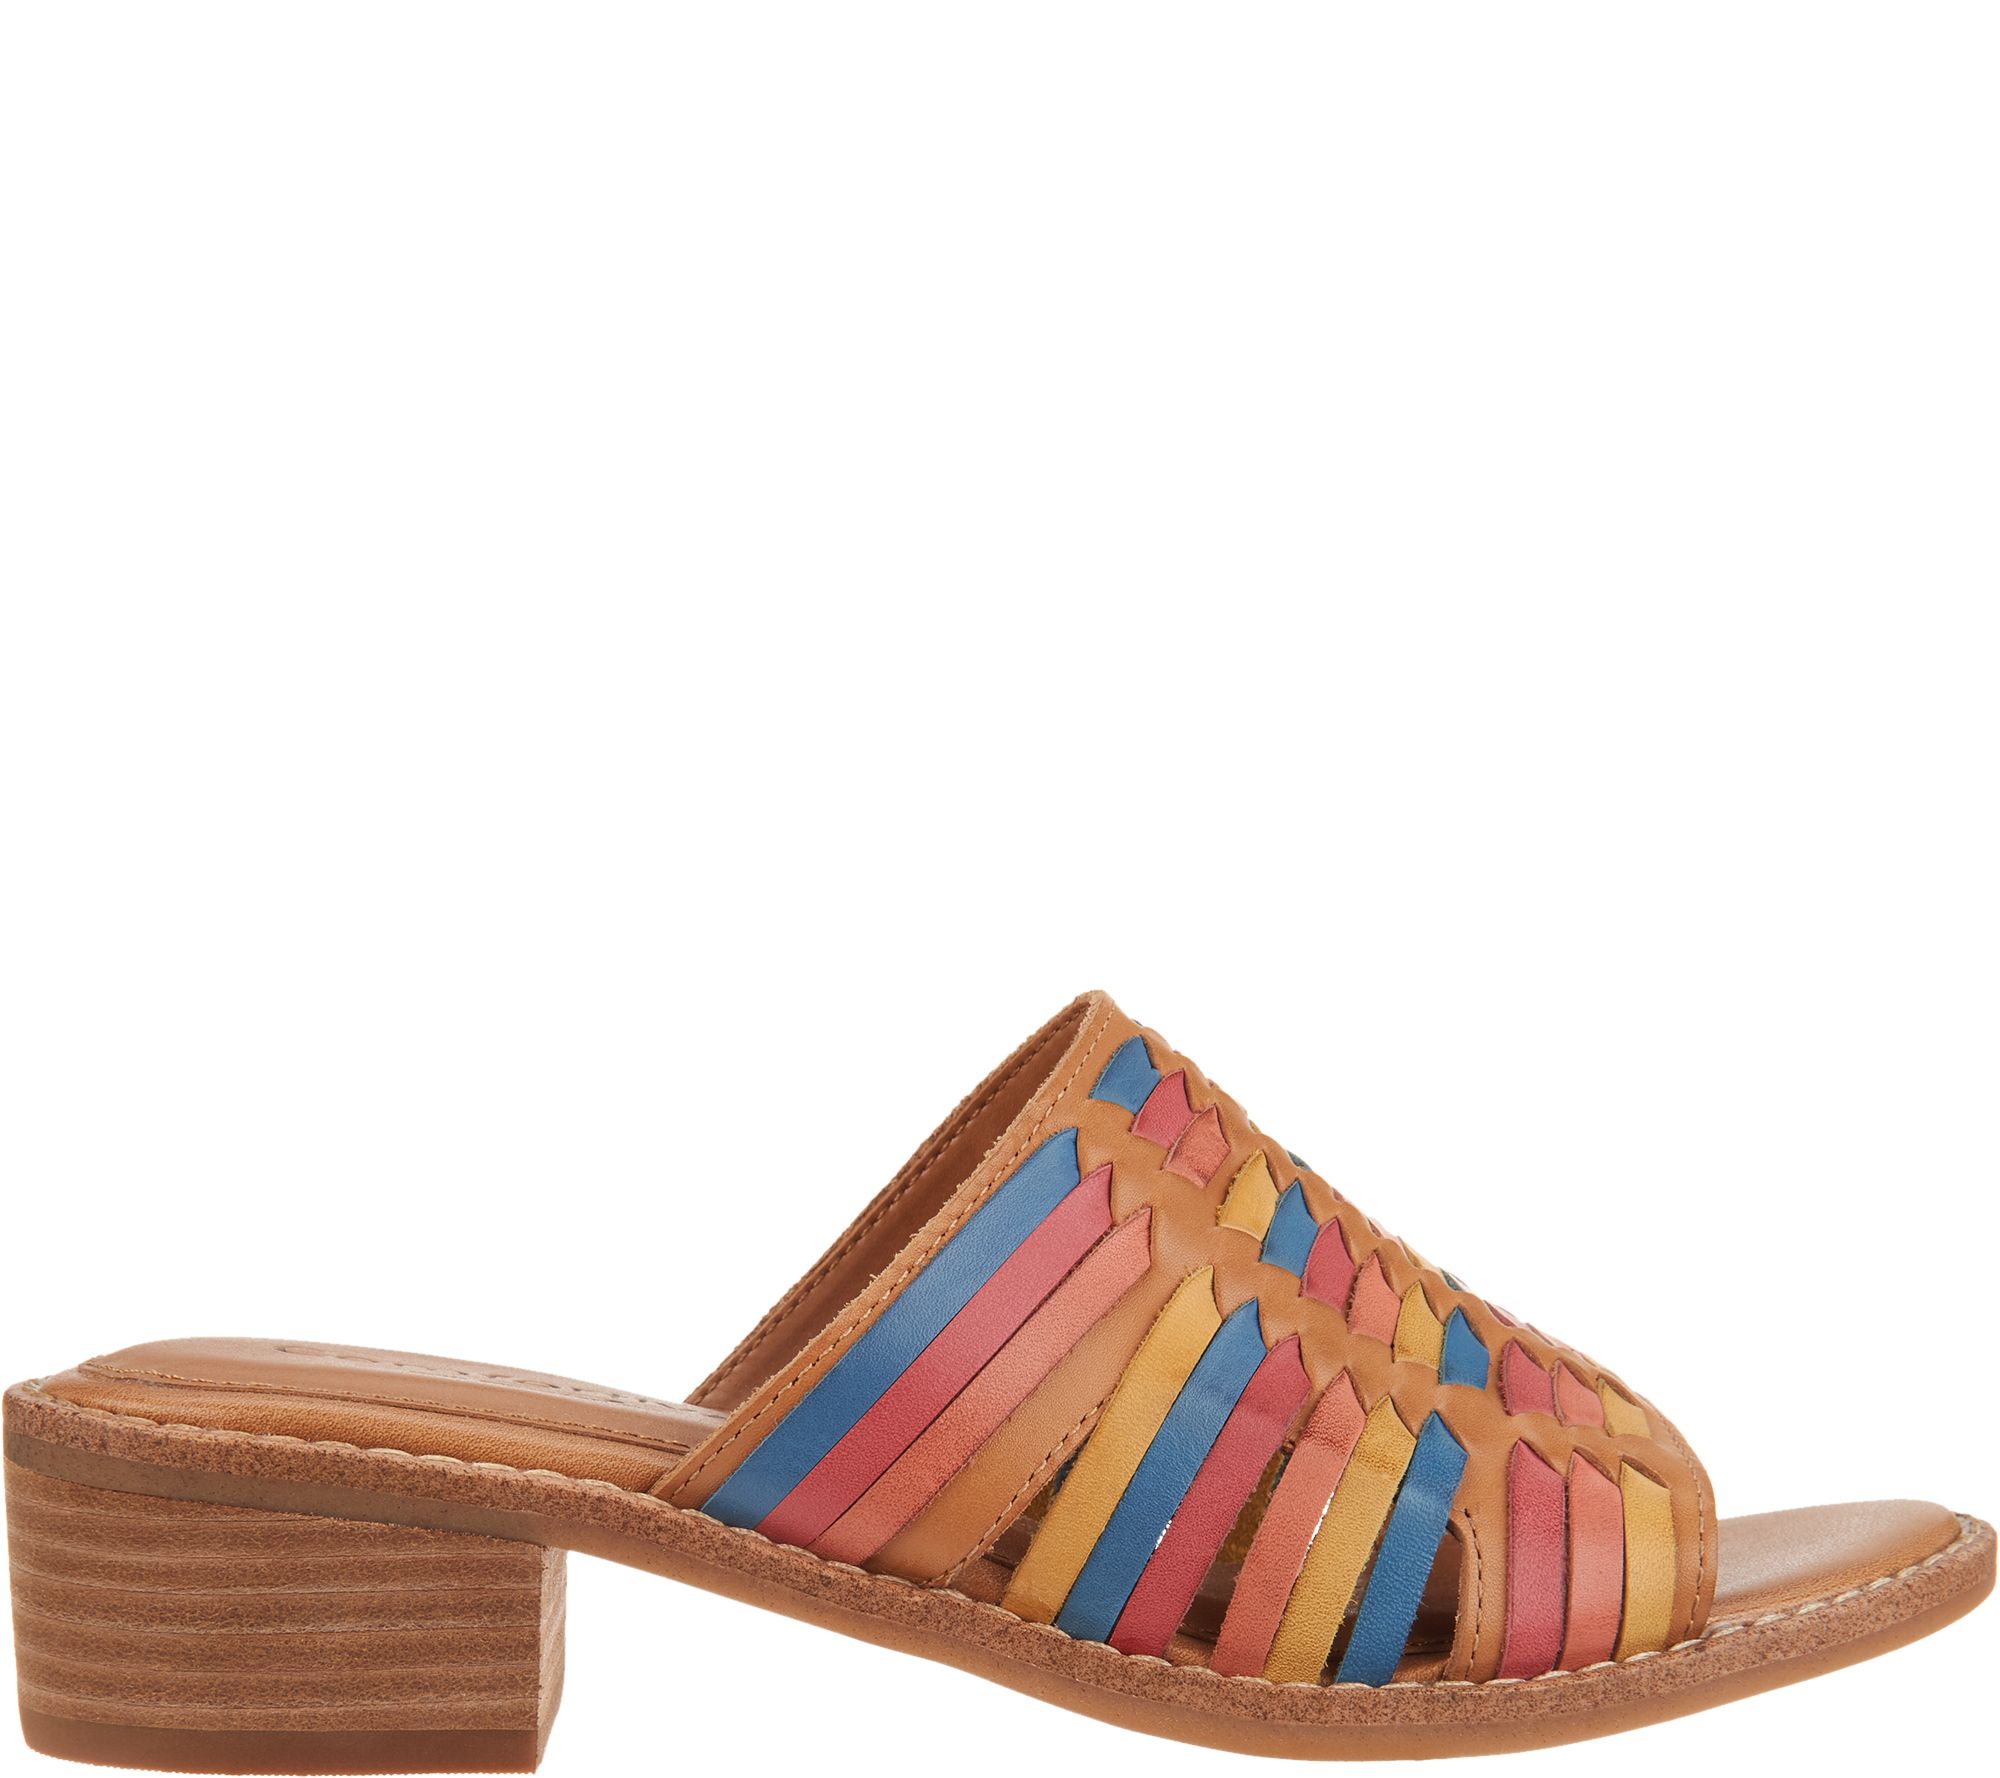 Comfortiva Leather Huarache Slide Sandals - Brileigh - QVC.com